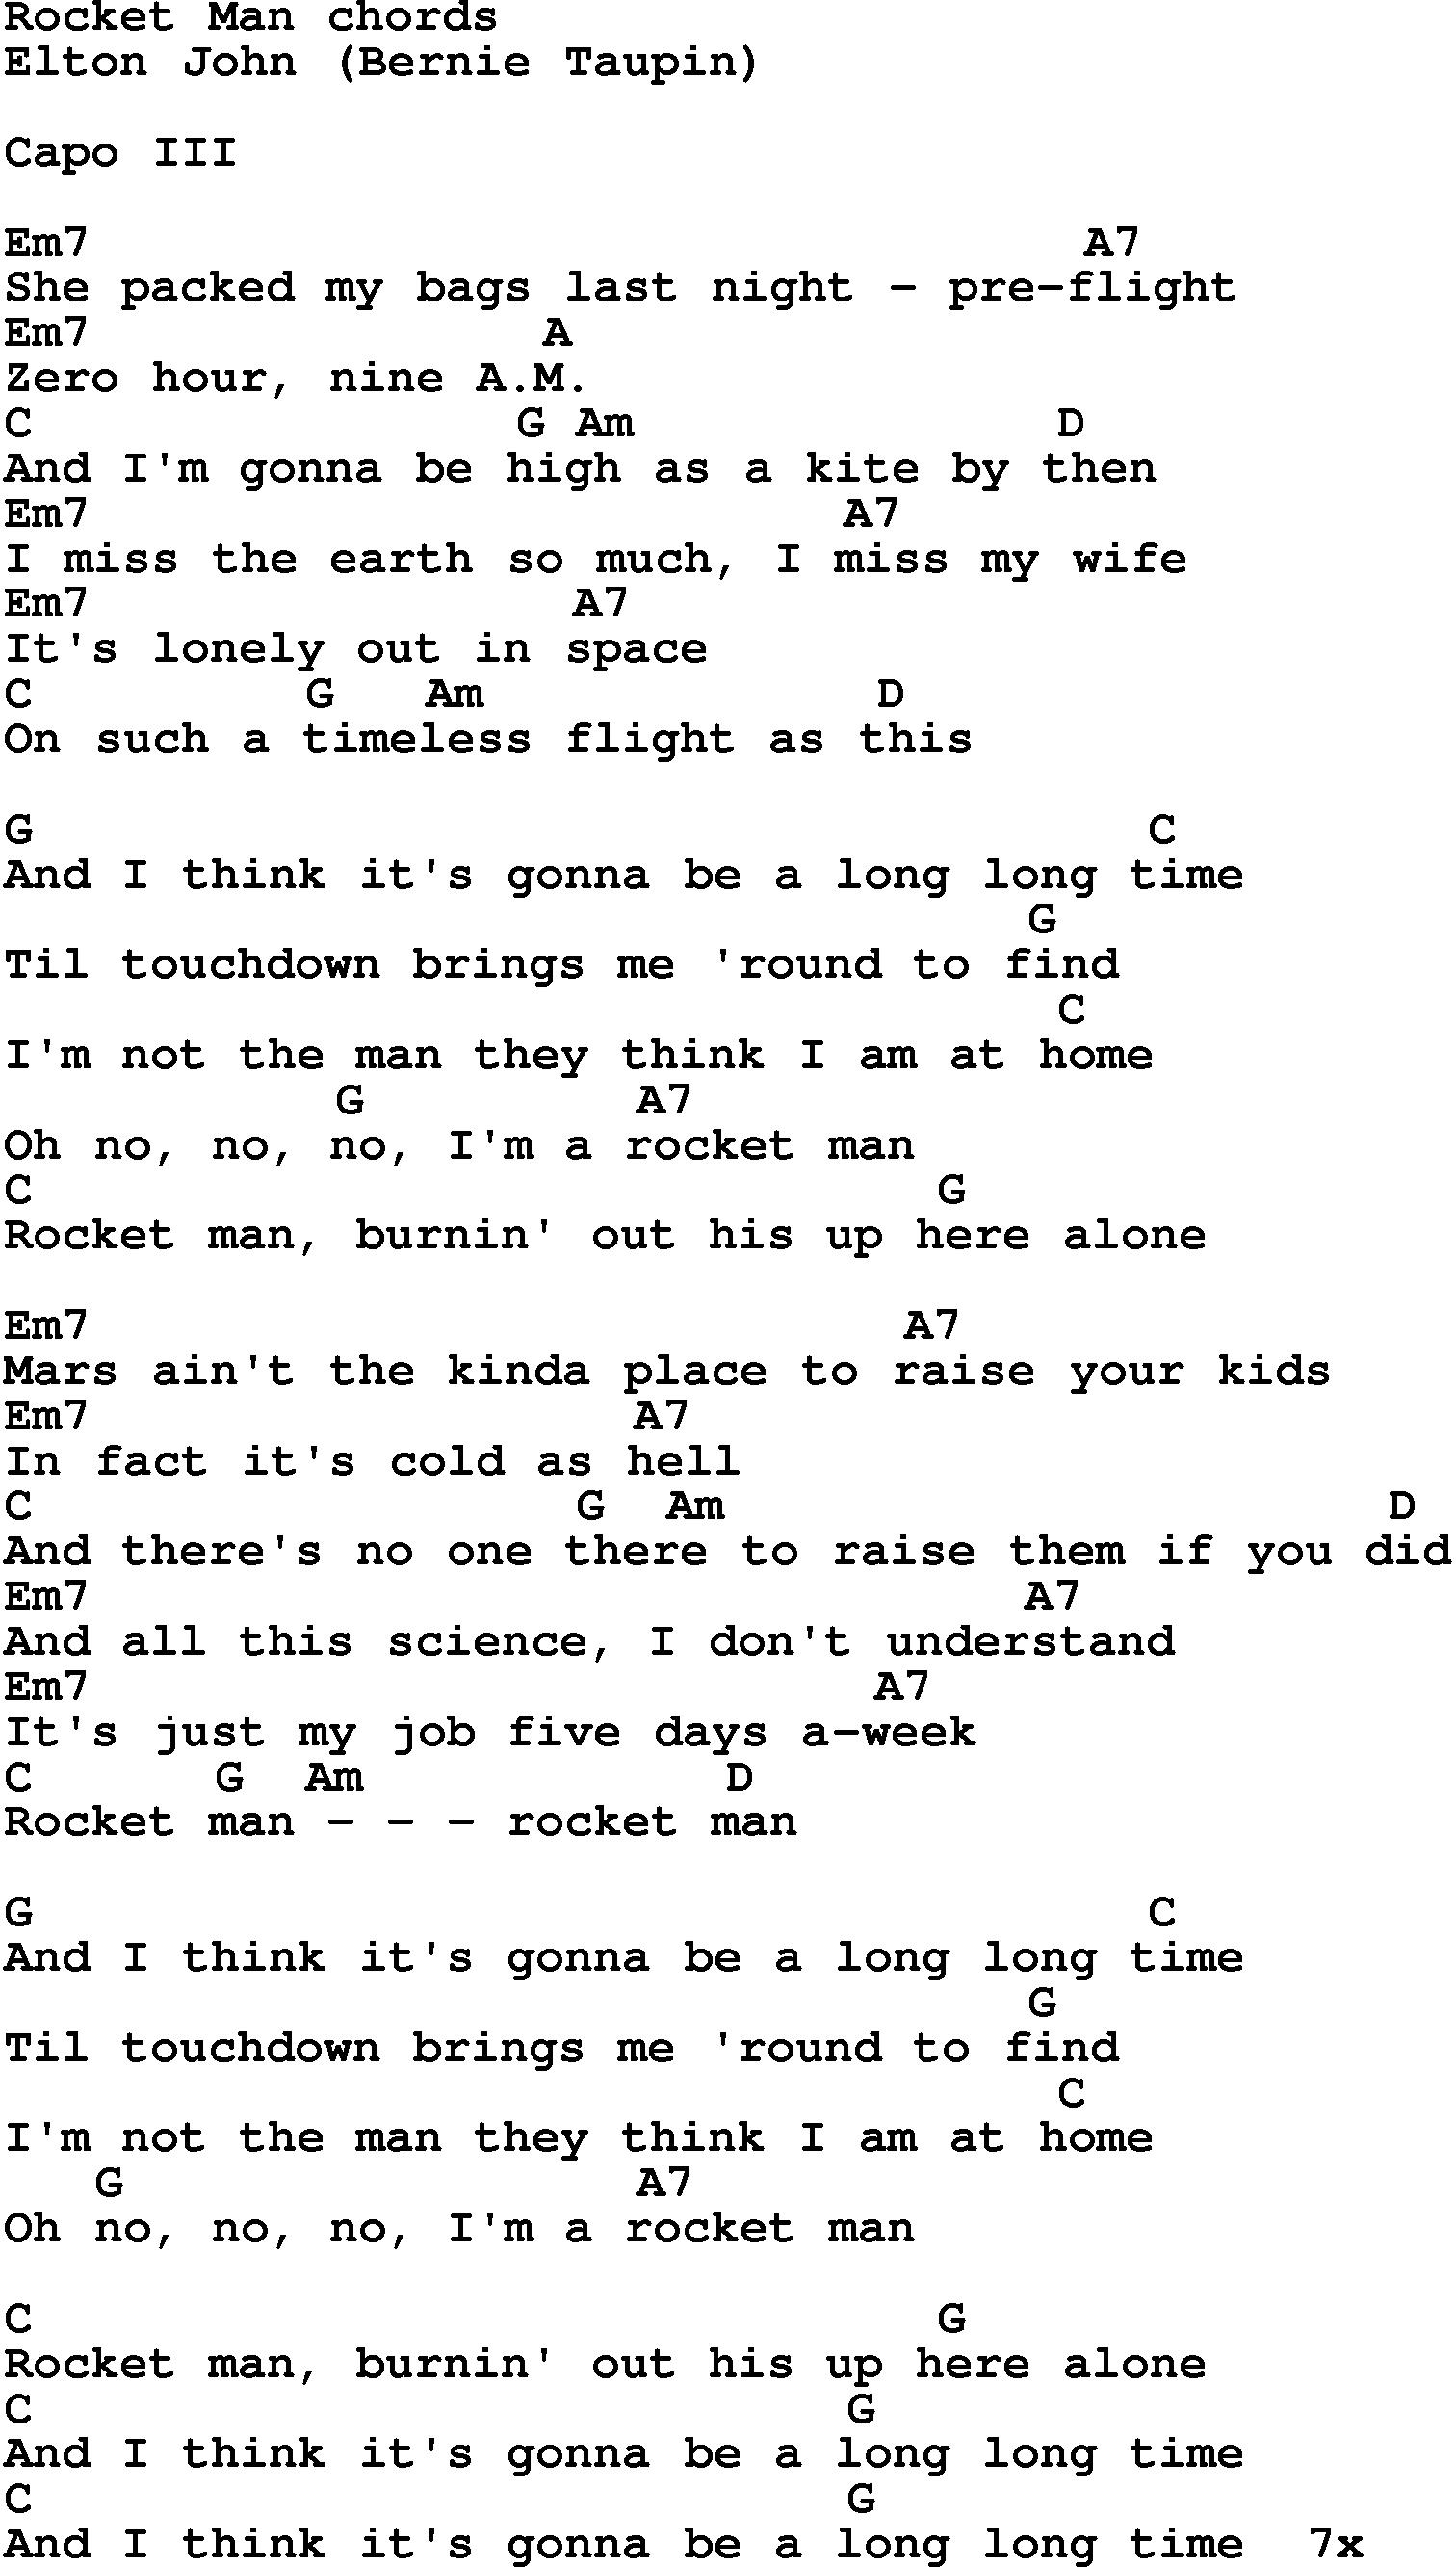 Song Lyrics with guitar chords for Rocket Man